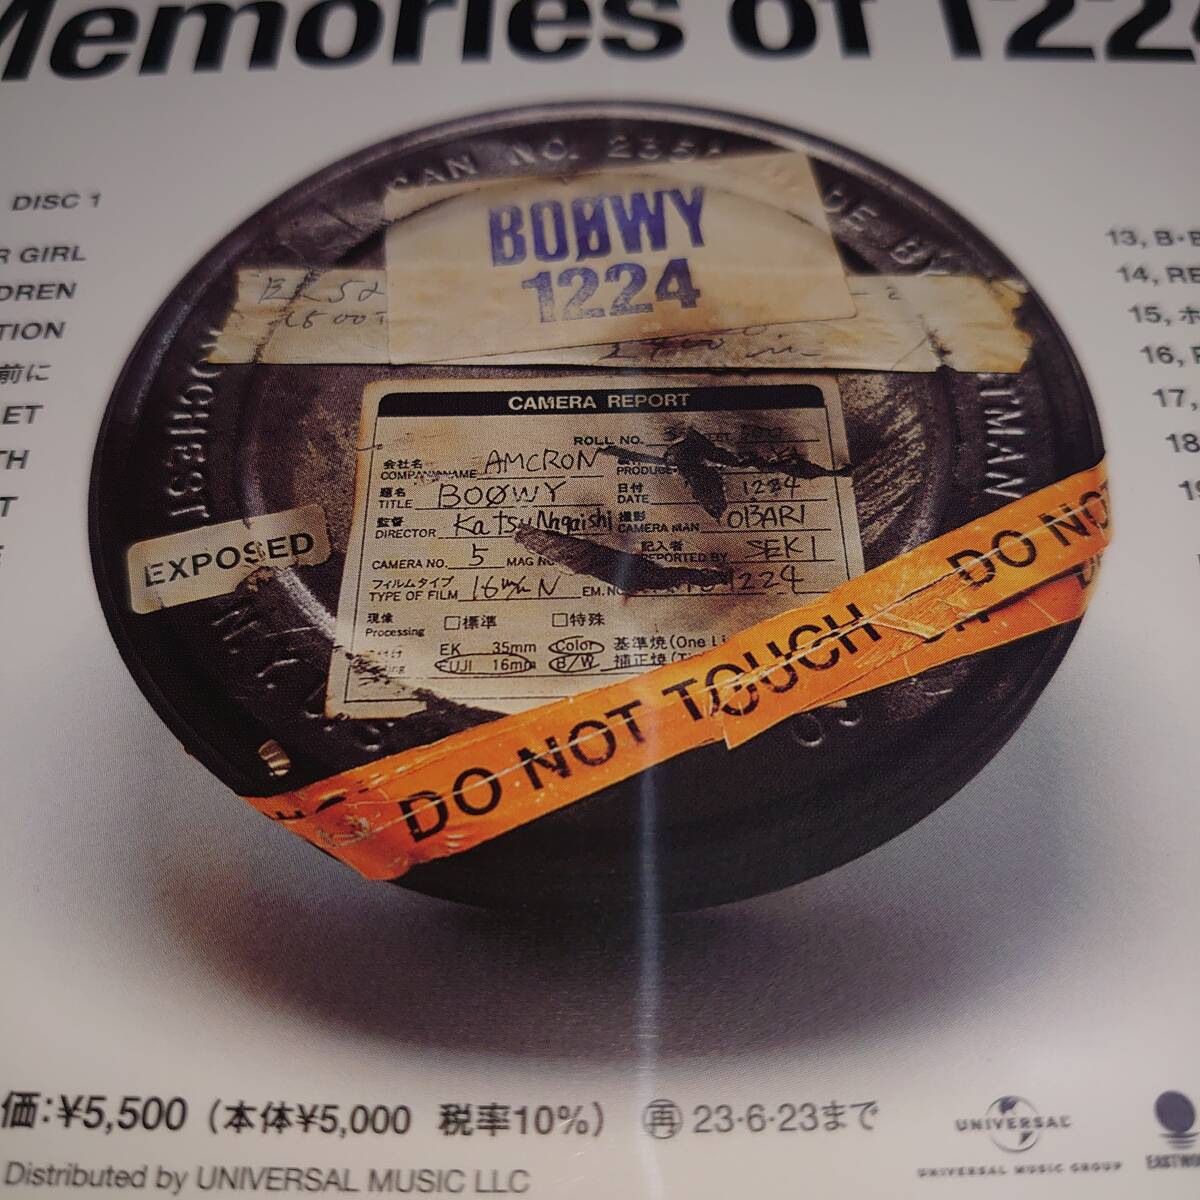 新品未開封品 2CD「BOOWY Memories of 1224」 40th MEMORIAL BOX SPECIAL PHOTOBOOK 特典付き 氷室京介 Q.E.D 35TH Blu-ray_画像8